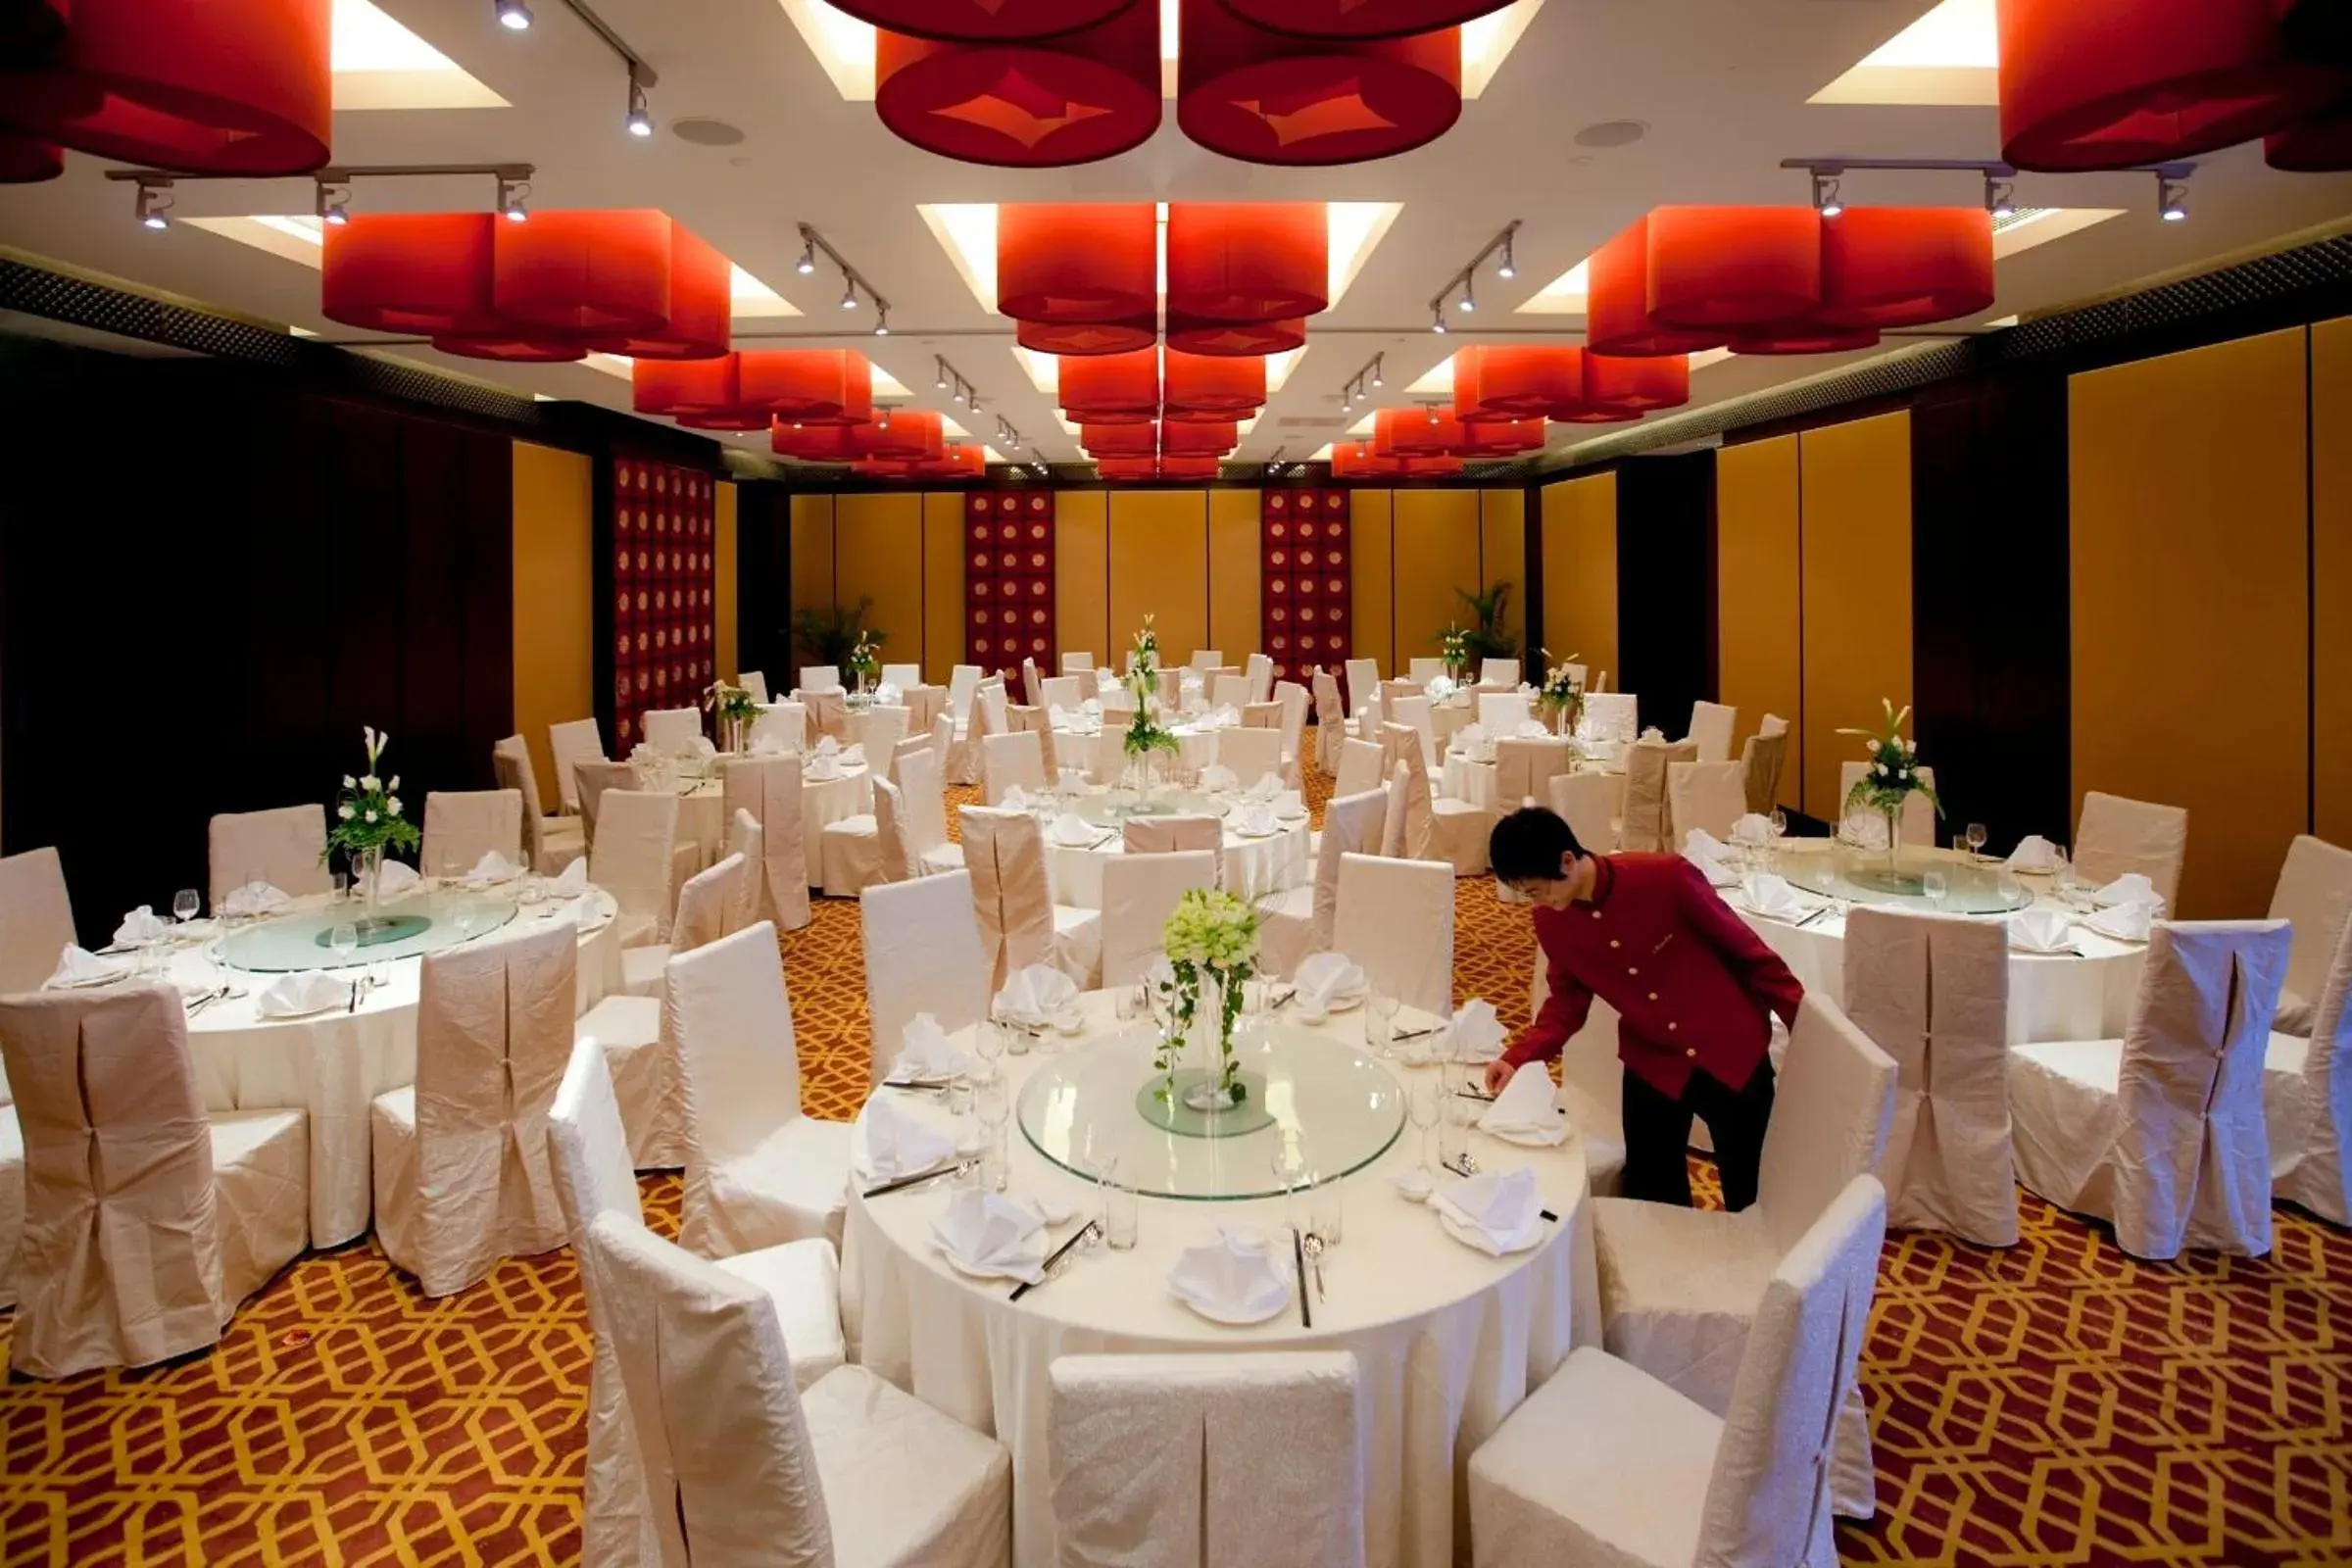 Banquet/Function facilities, Banquet Facilities in Banyan Tree Hangzhou